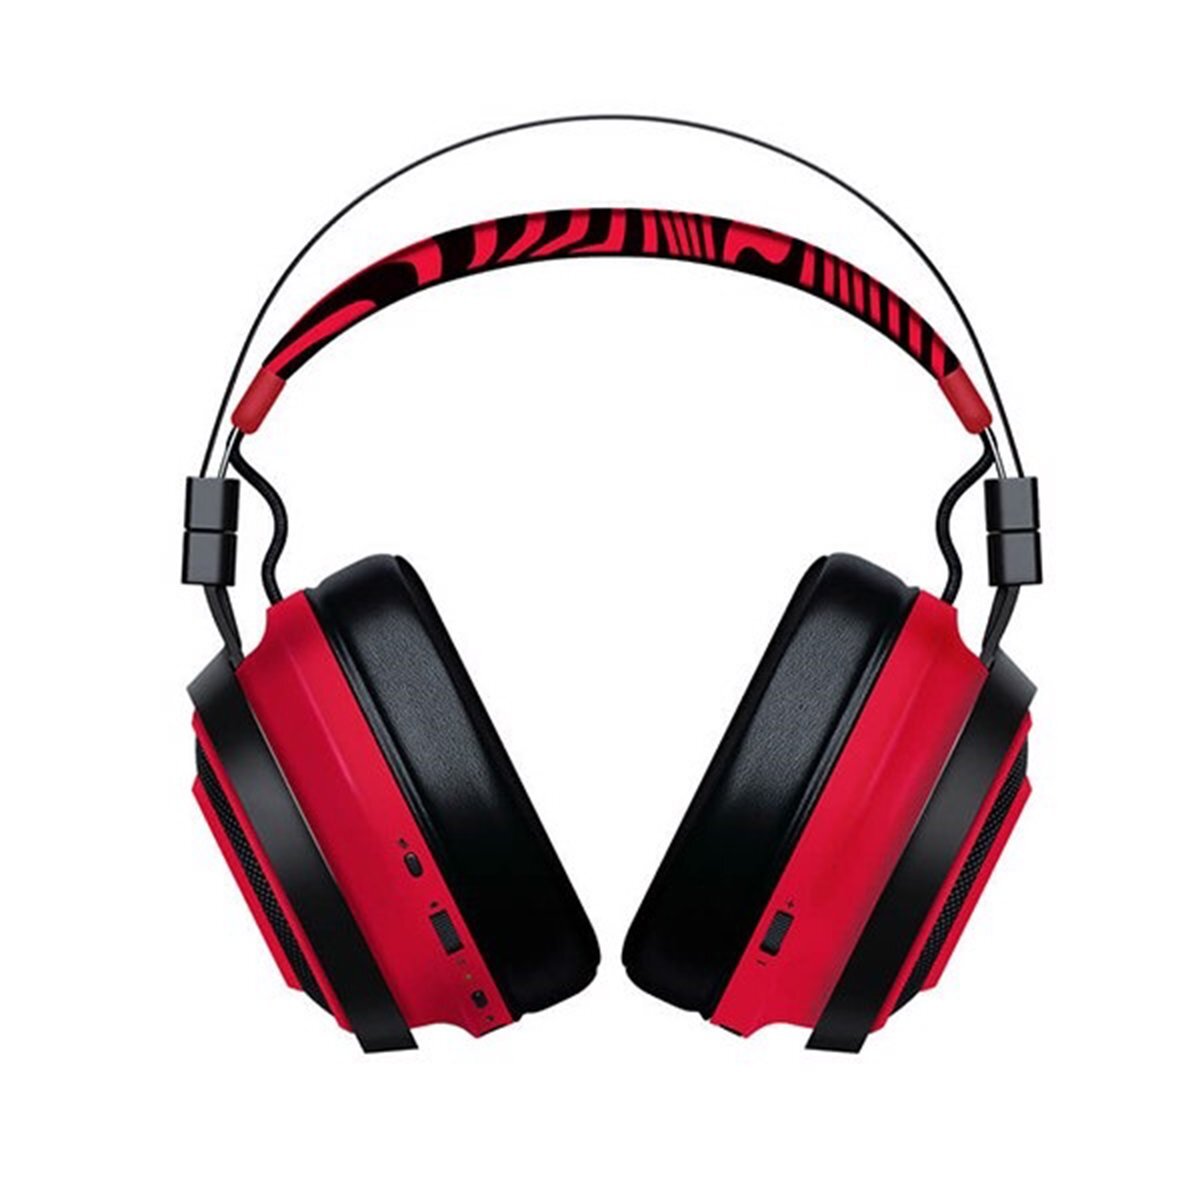 Tai nghe - Headphone Razer Nari Ultimate PewDiePie Edition